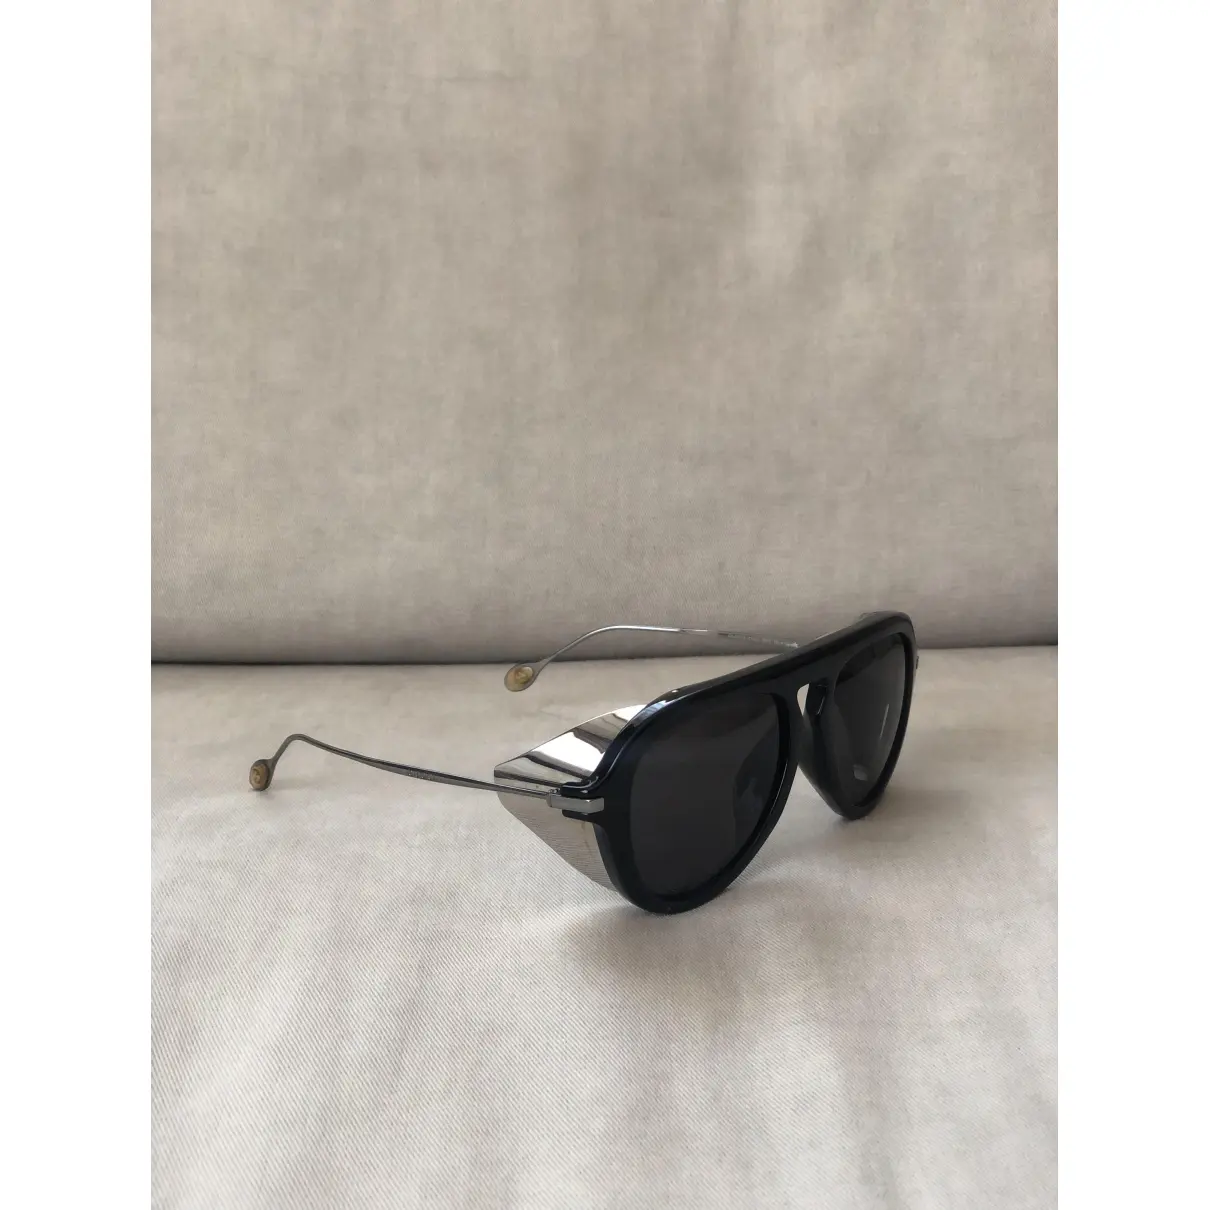 Buy Gucci Aviator sunglasses online